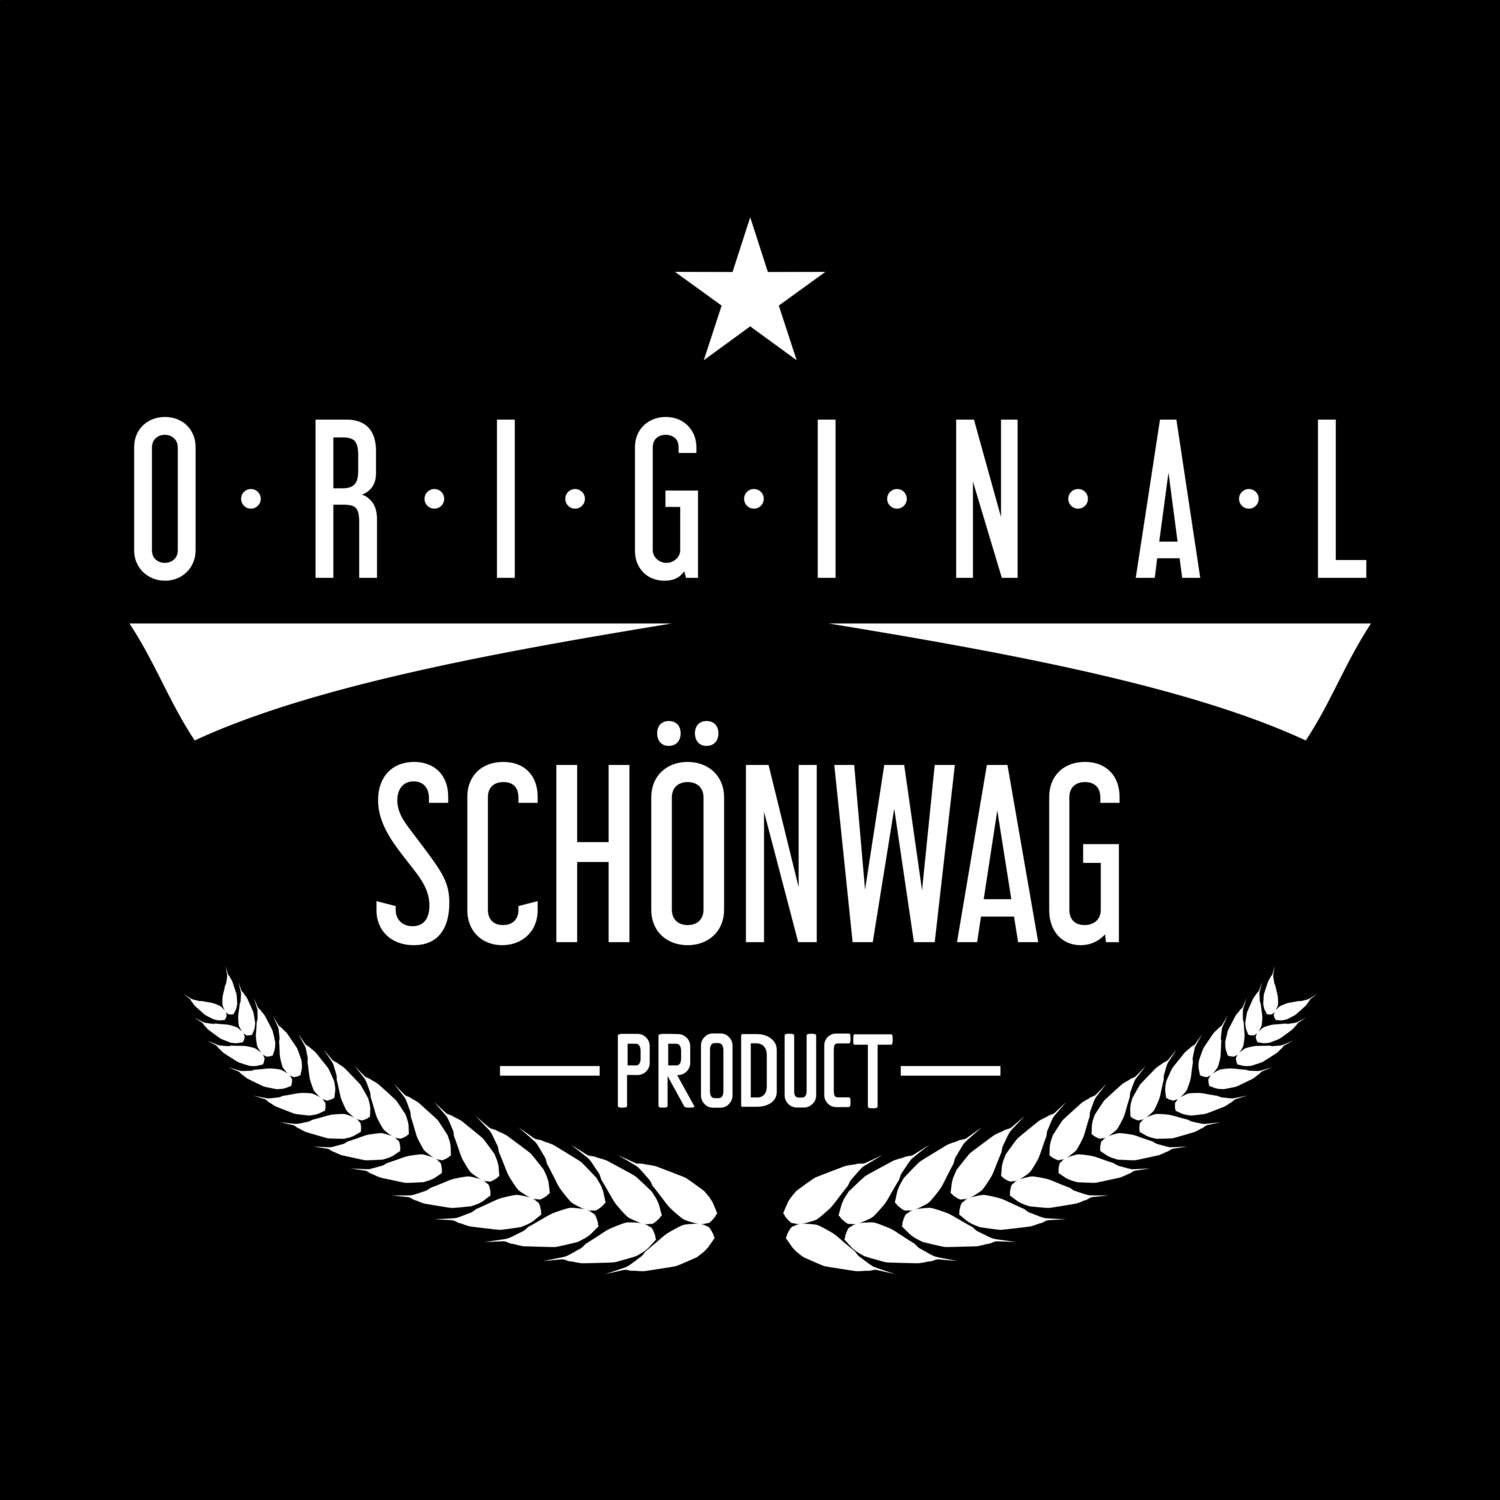 Schönwag T-Shirt »Original Product«